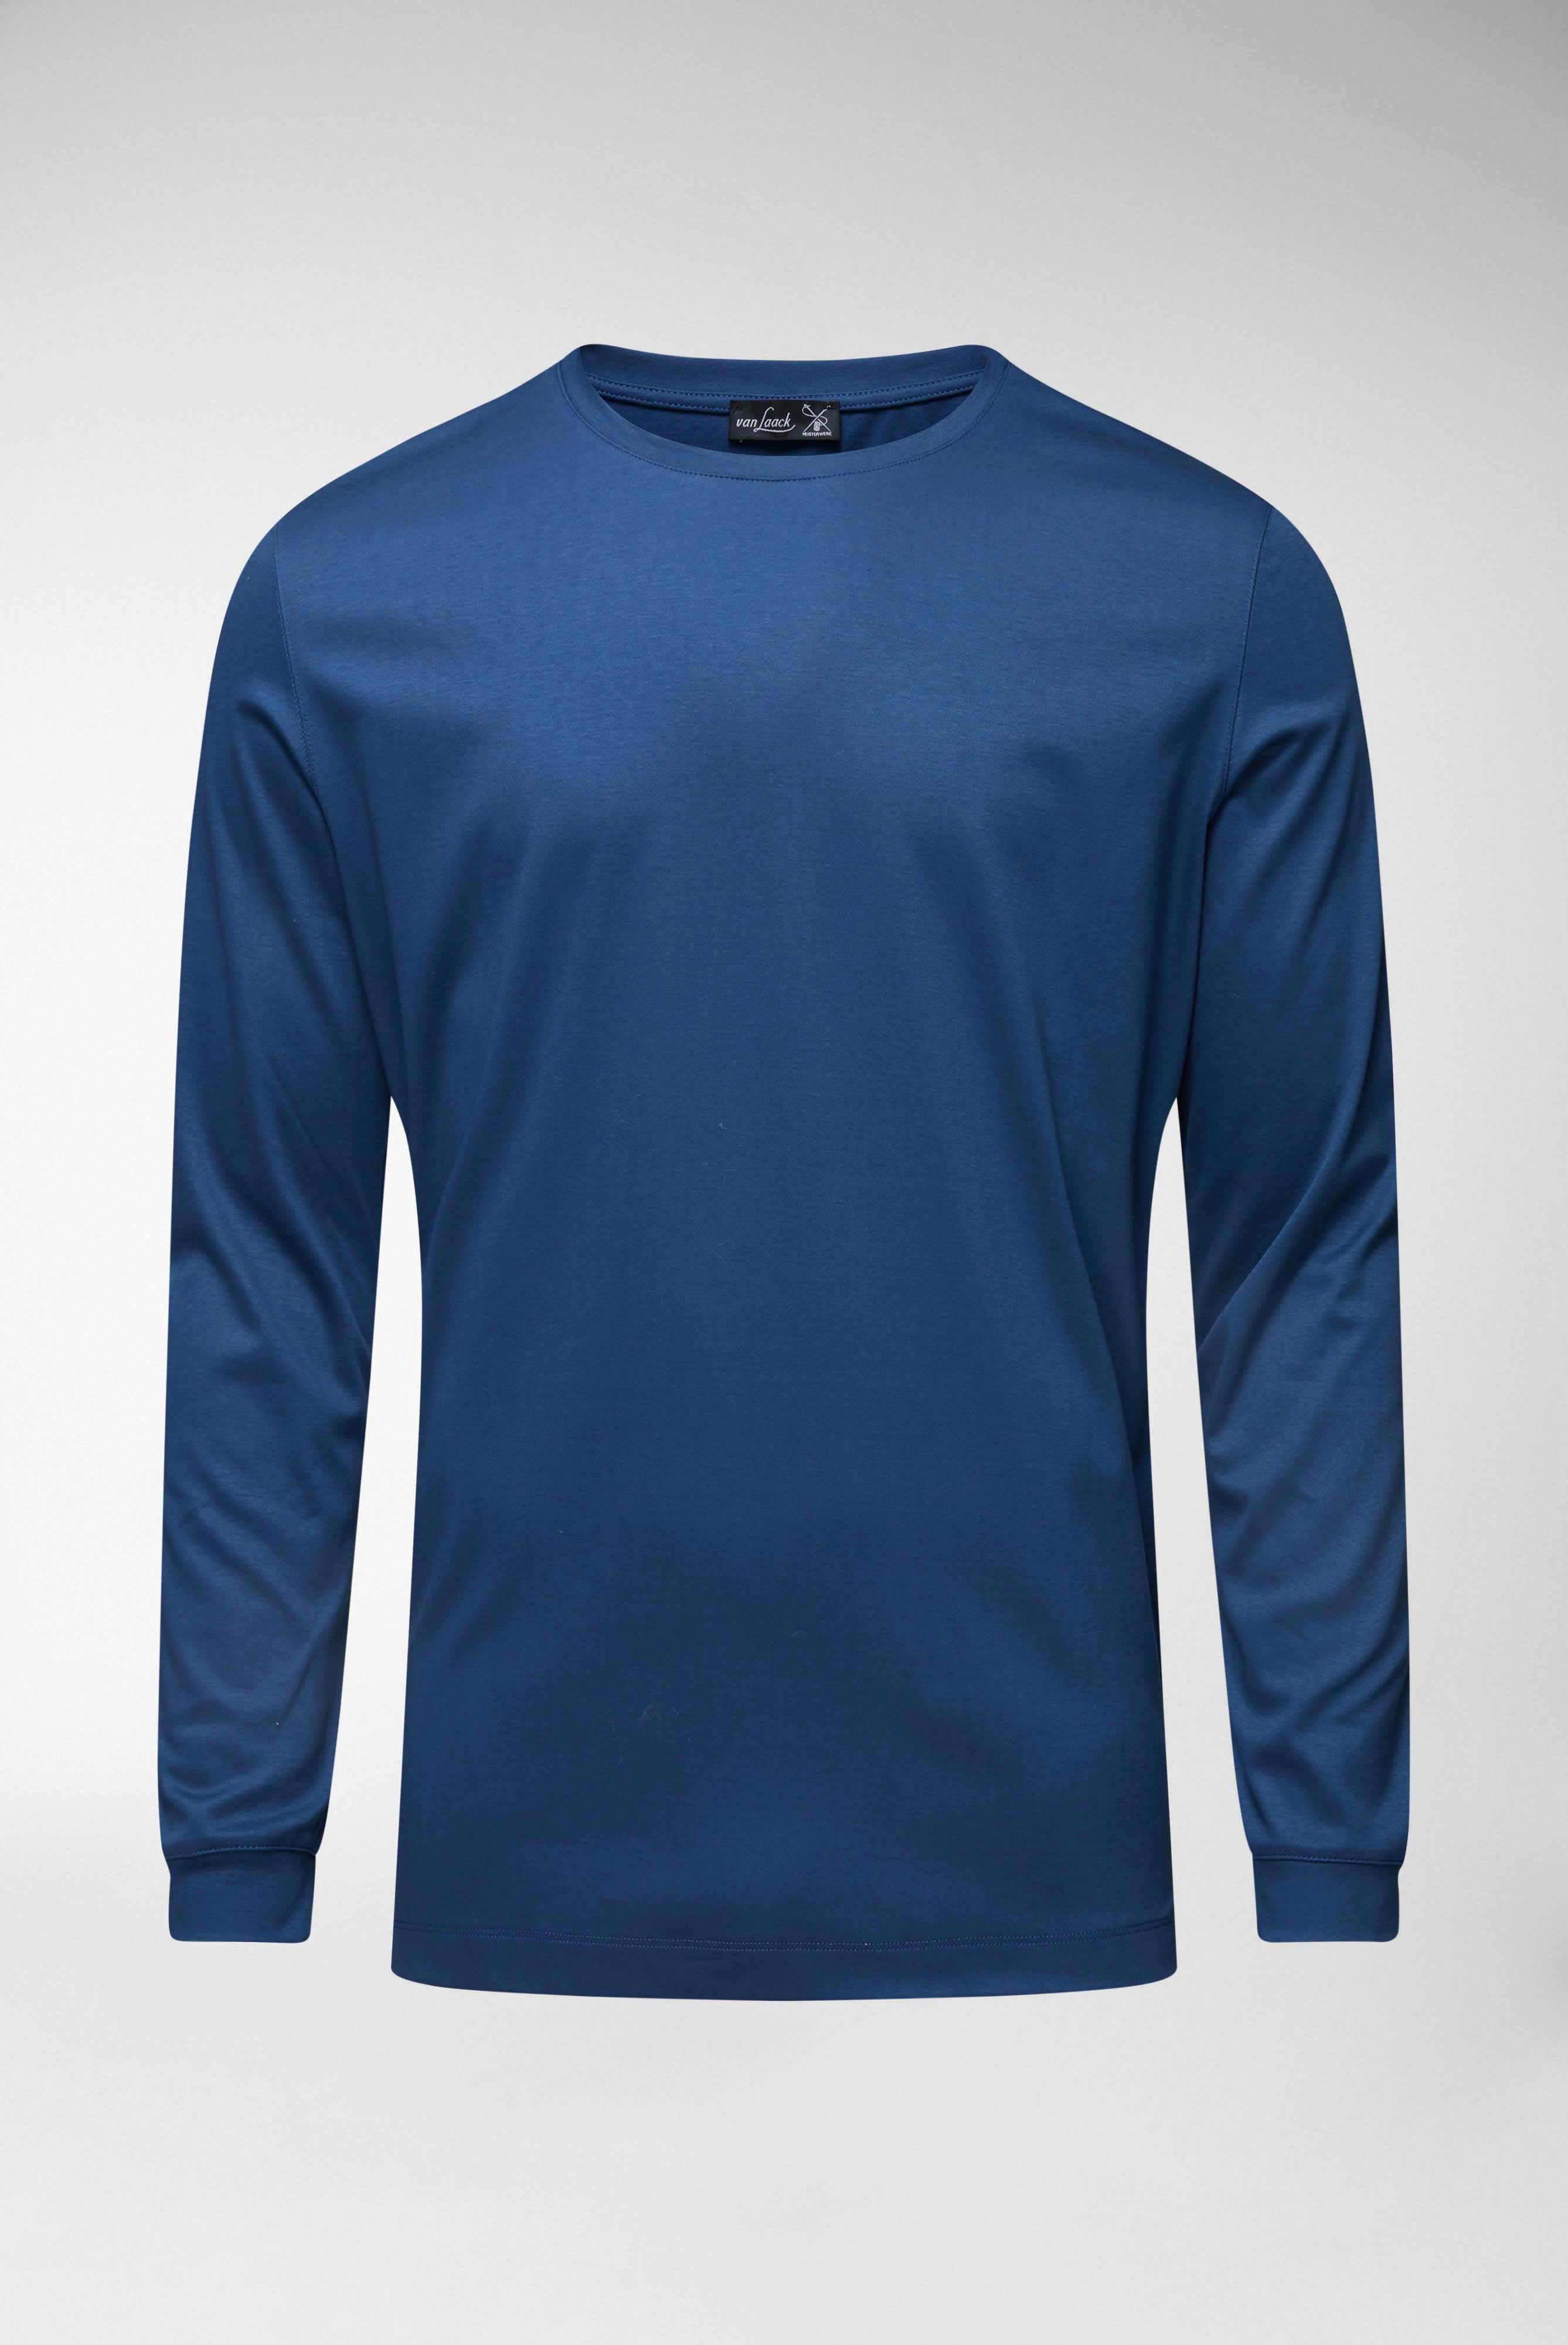 T-Shirts+Long Sleeve T-shirt Swiss Cotton+20.1718.UX.180031.780.X3L